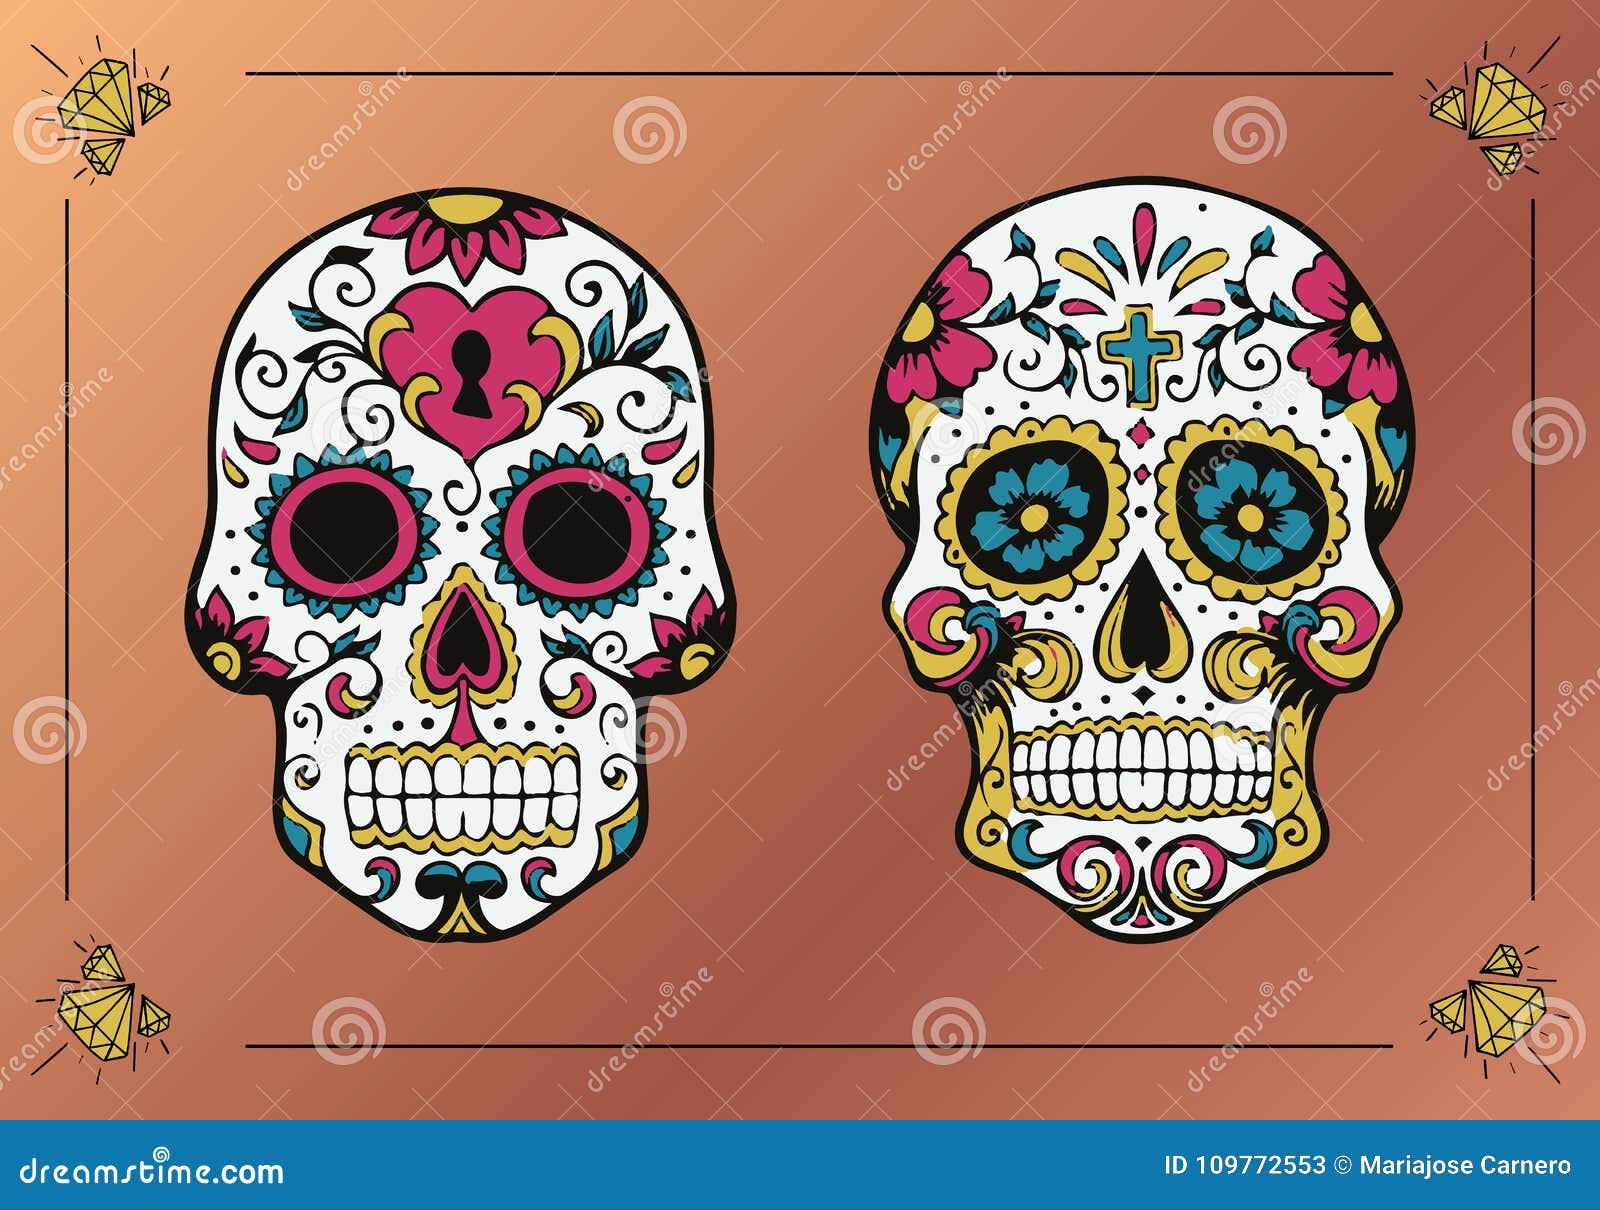 decorated skulls. la calavera catrina